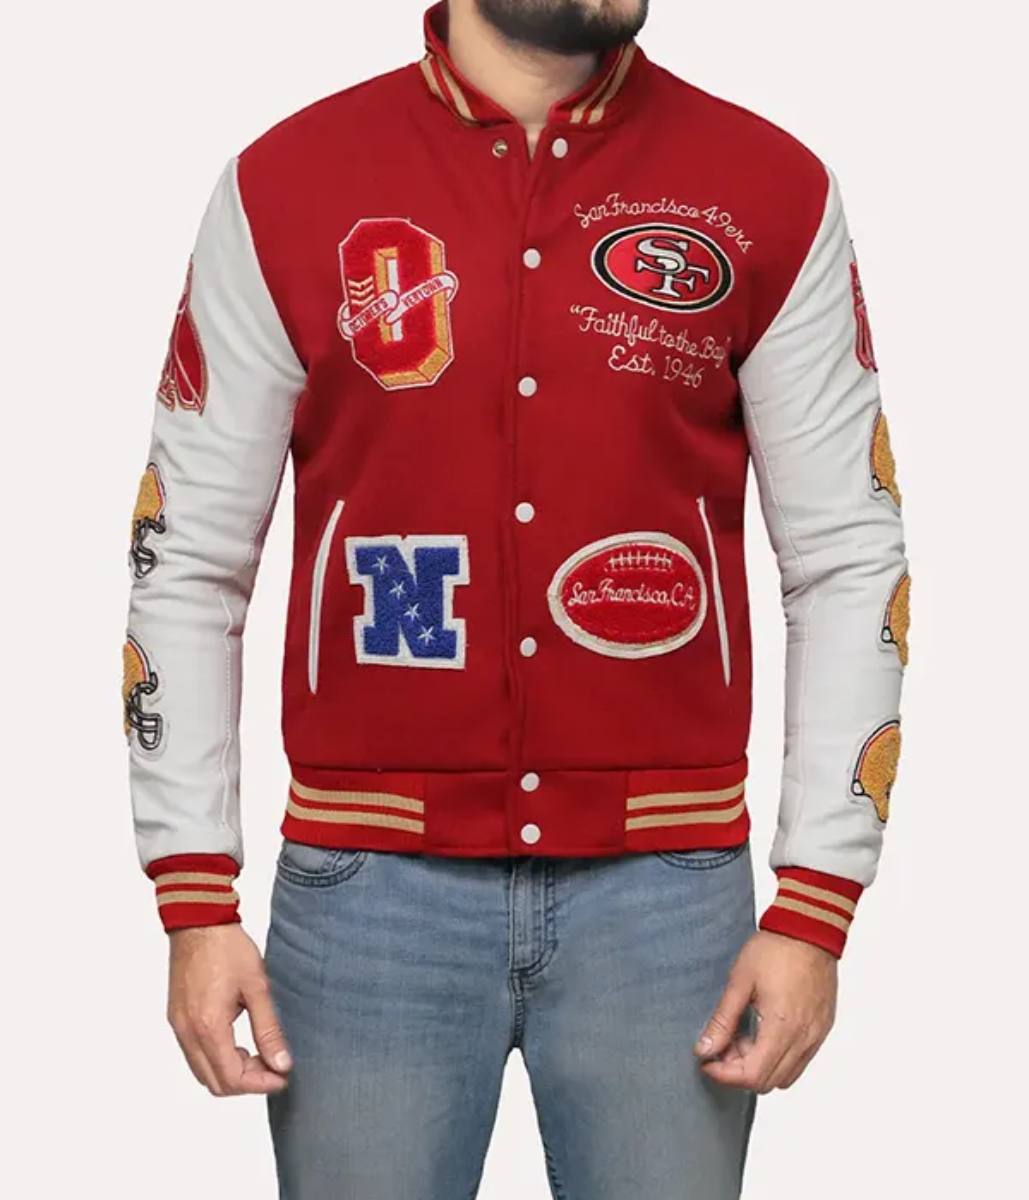 Mens San Francisco 49ers Ovo Jacket - Red Varsity jacket